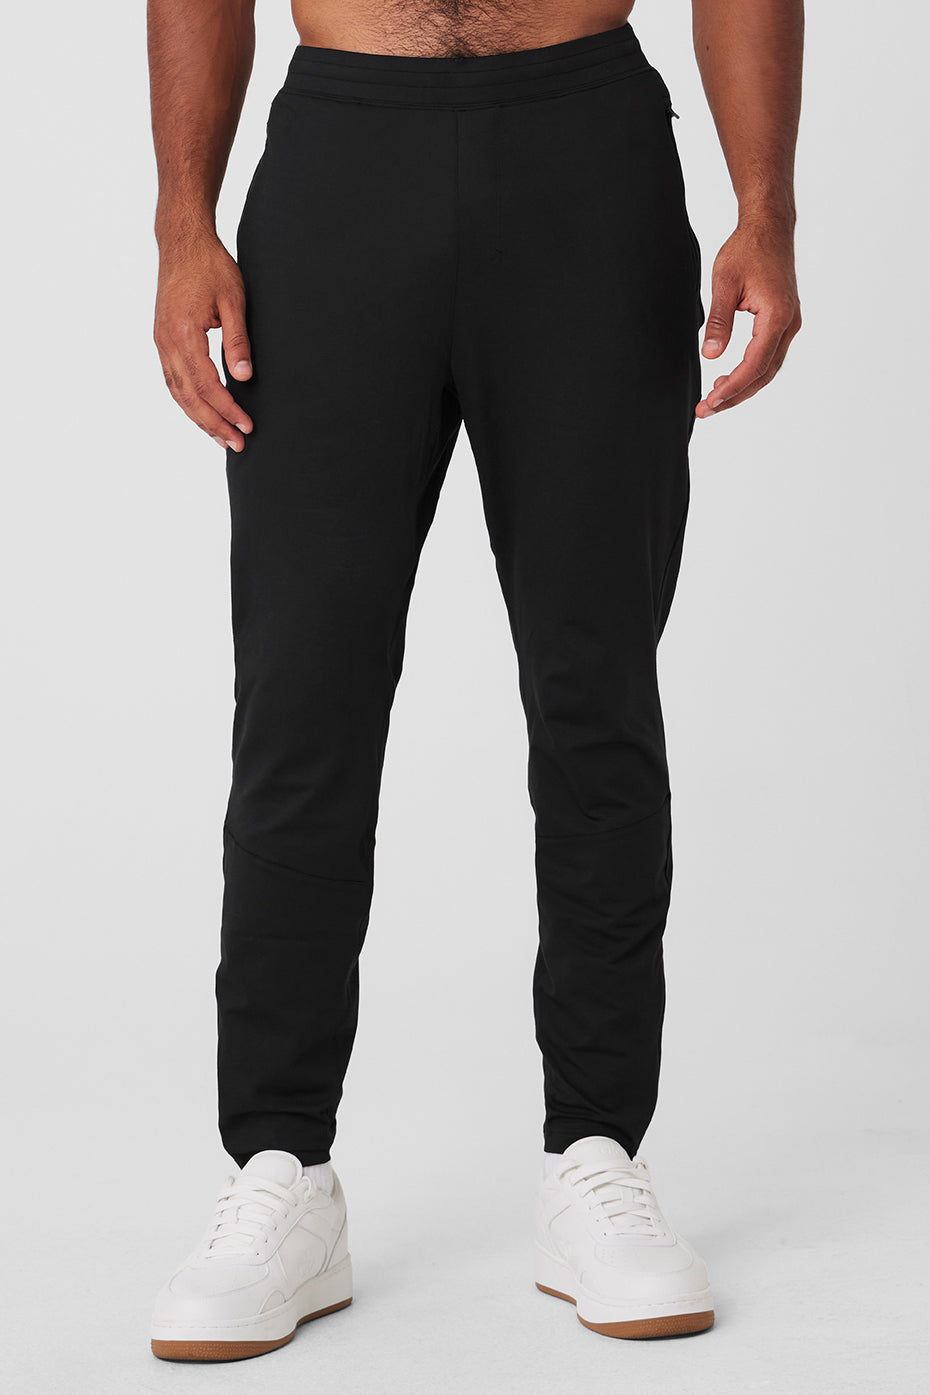 Nike Mens Wide Leg Heavy Sweatpants Size XL Black 